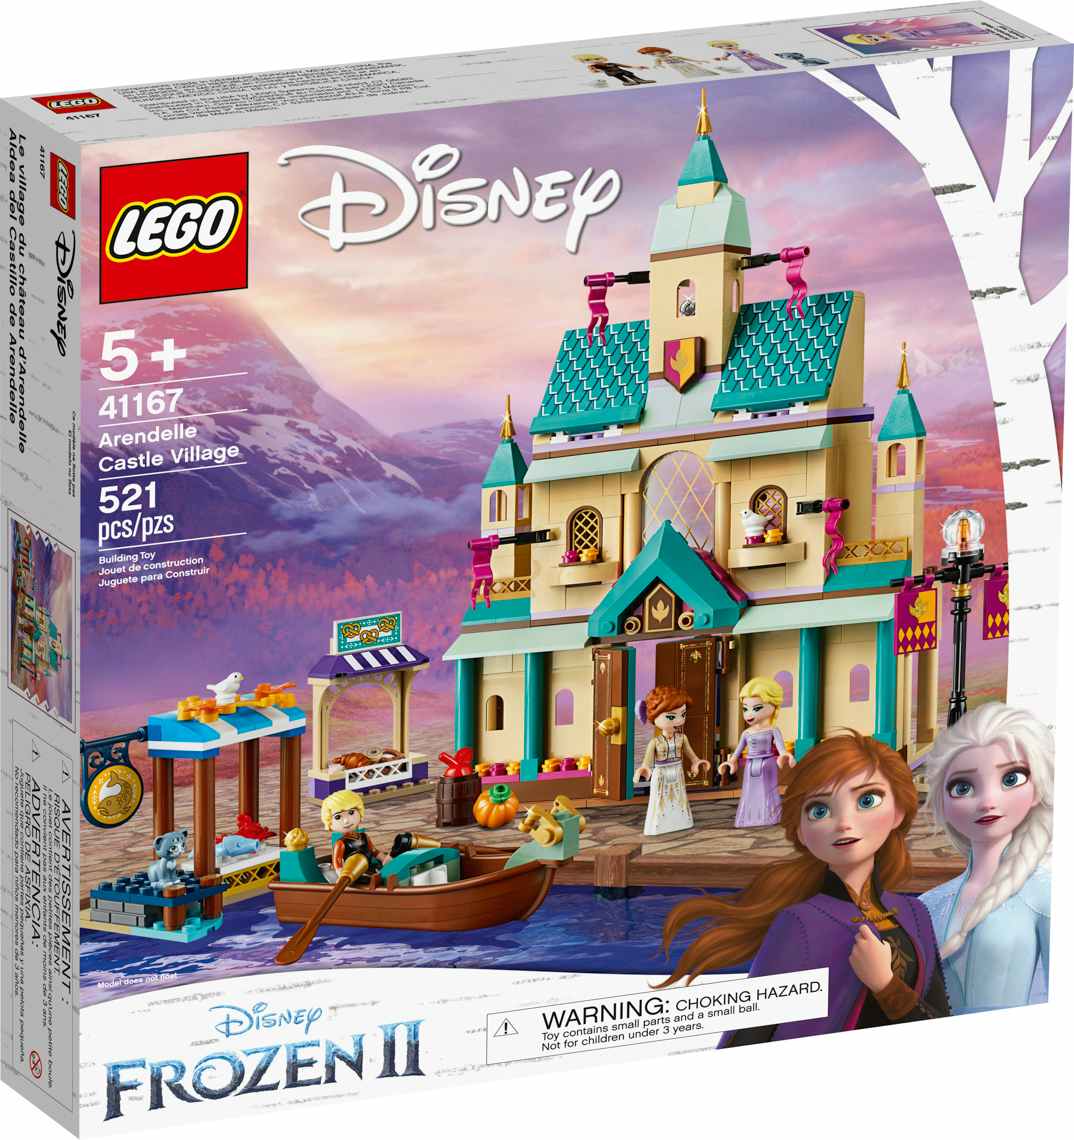 stock photo of lego disney frozen 2 arendelle castle building set in box on white background